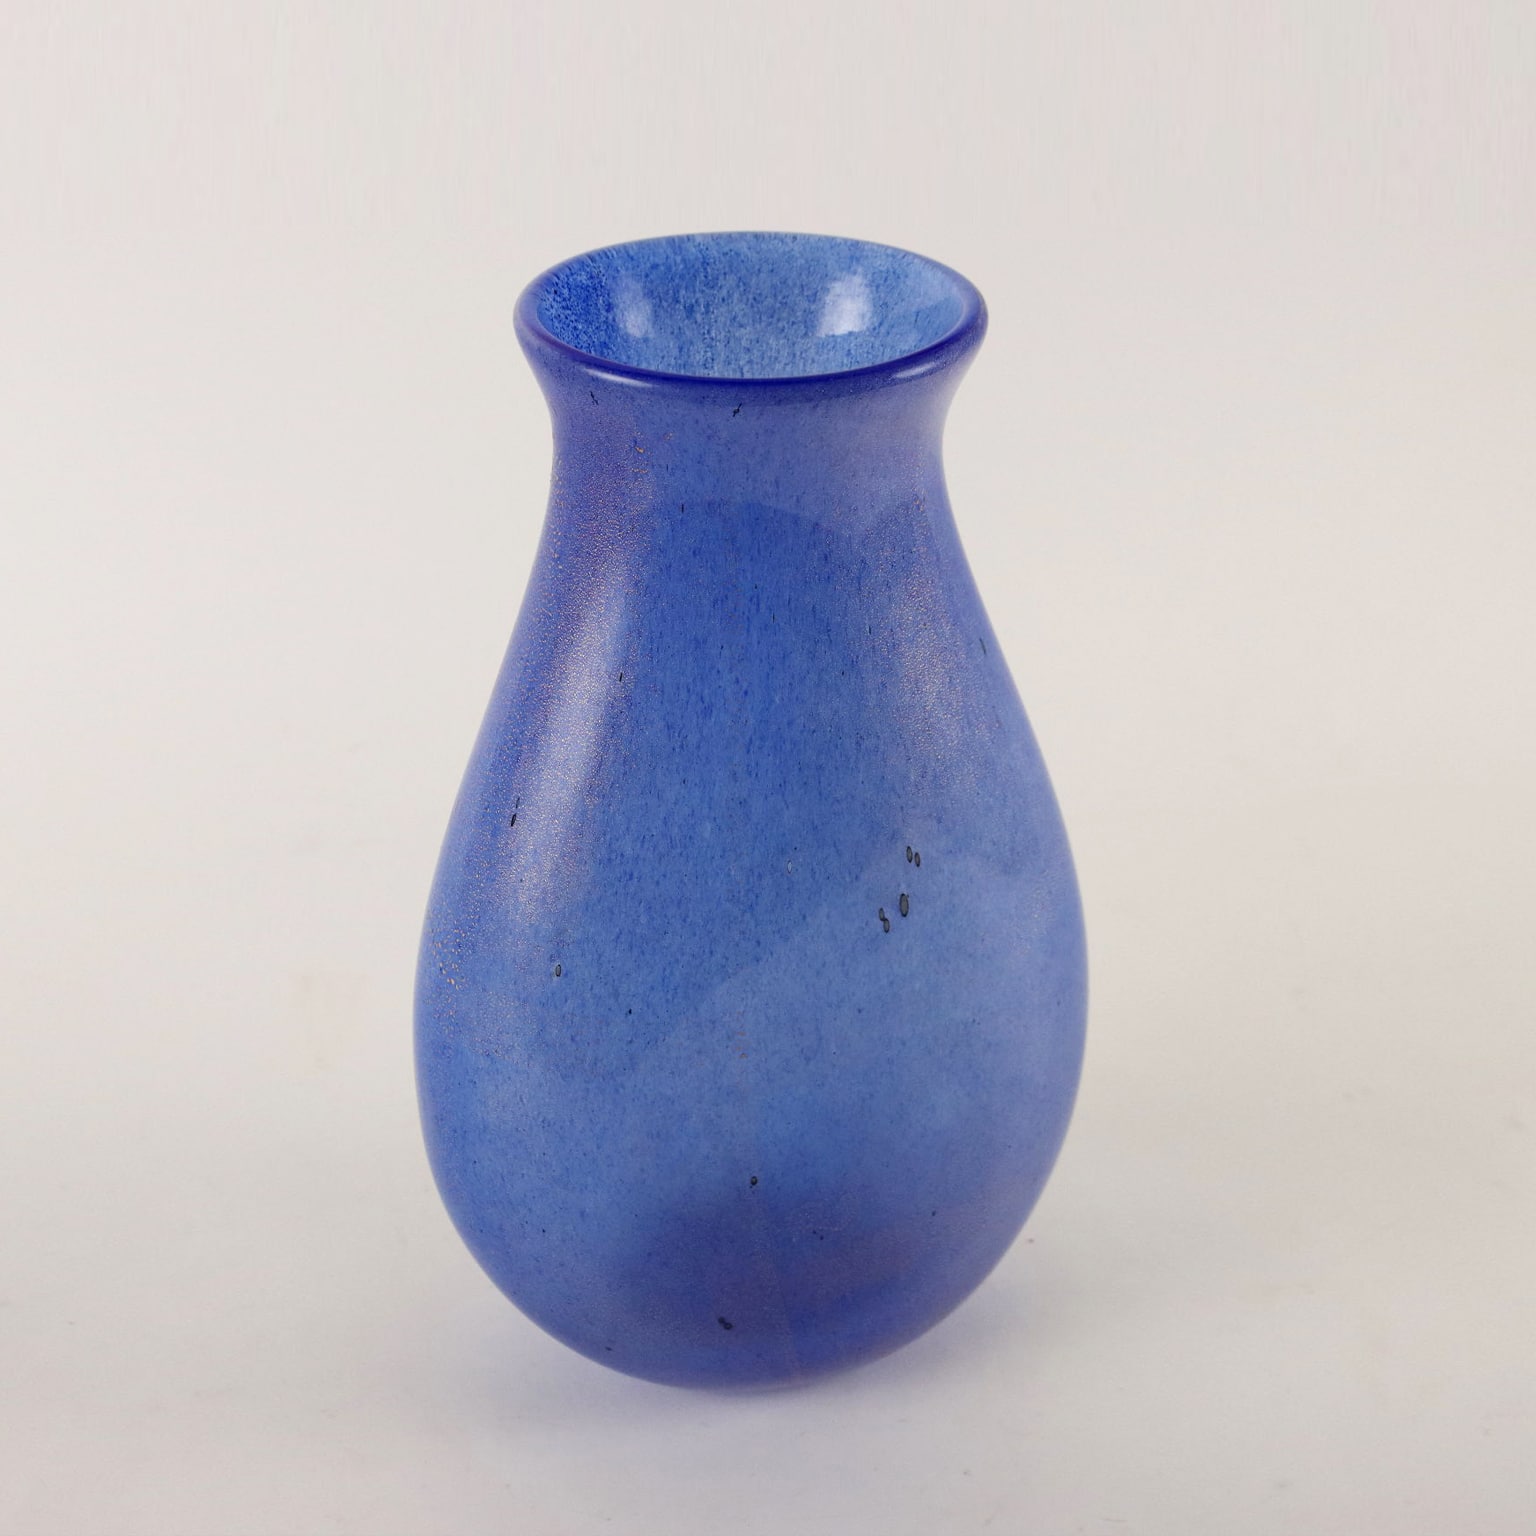 Vaso blu in vetro di Murano